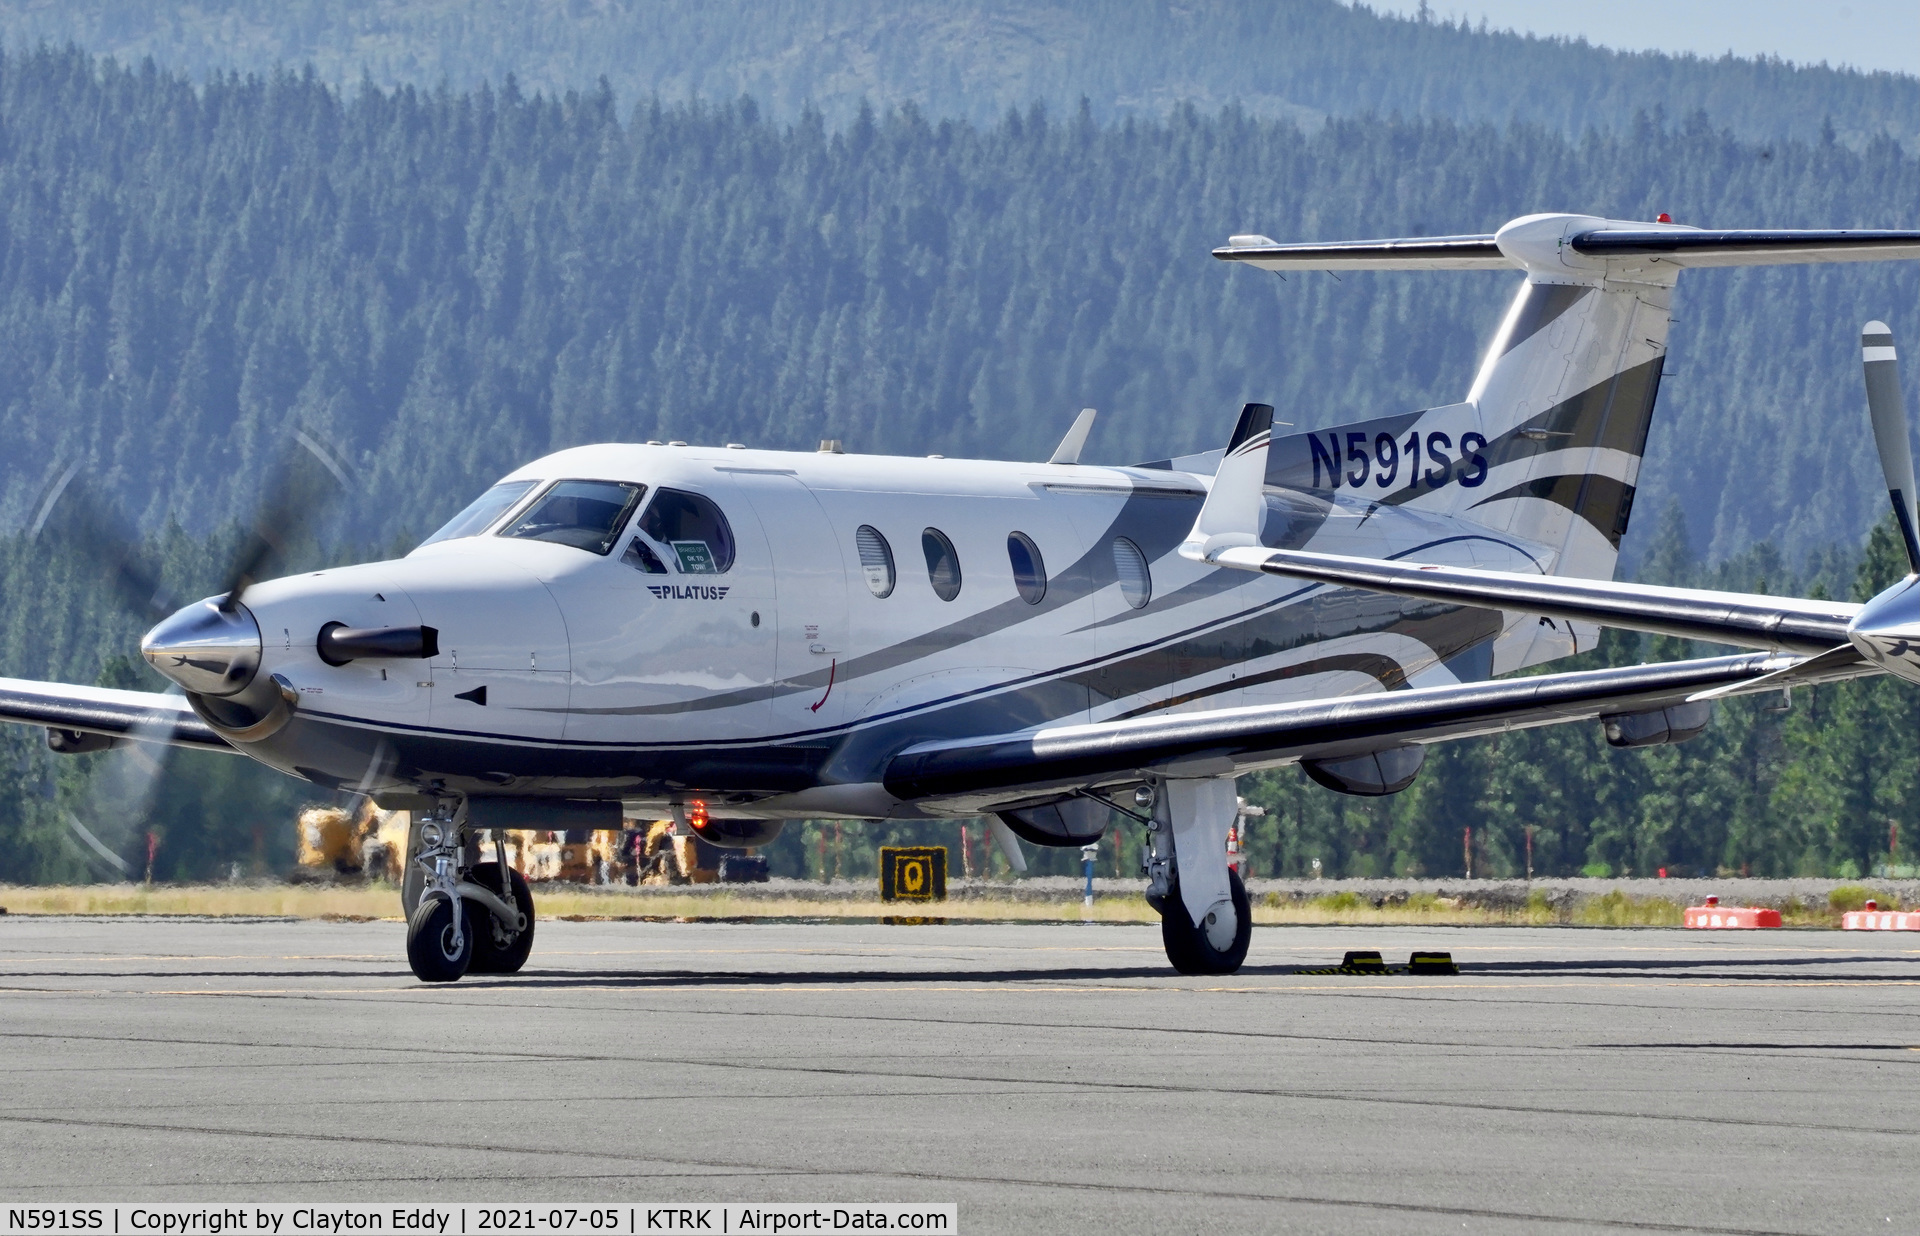 N591SS, 2004 Pilatus PC-12/45 C/N 591, Truckee airport California 2021.